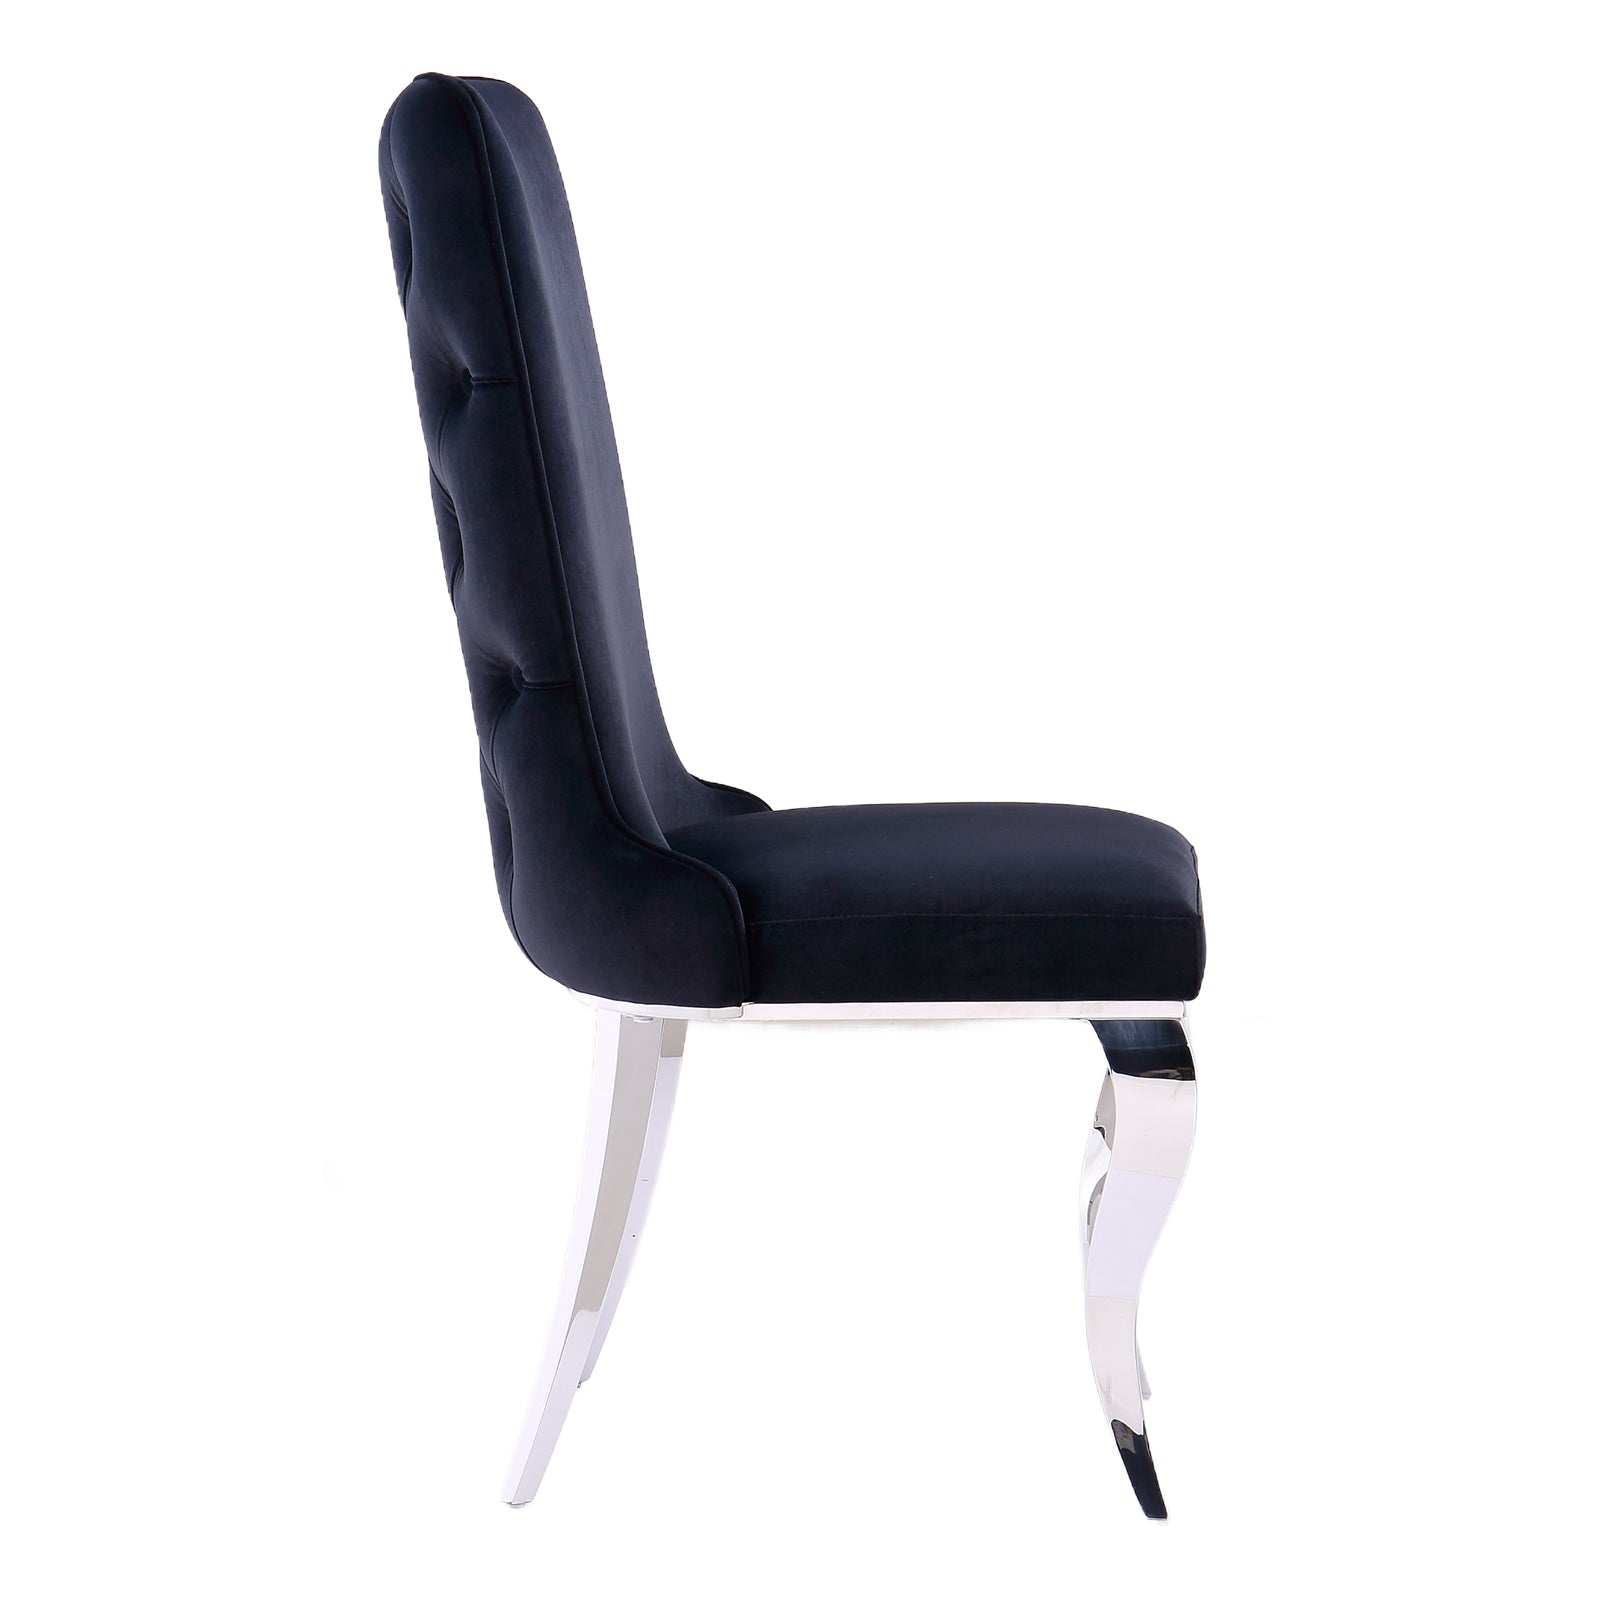 Black velvet Dining Chairs | Button Back | Heavy duty | Silver metal legs | C161